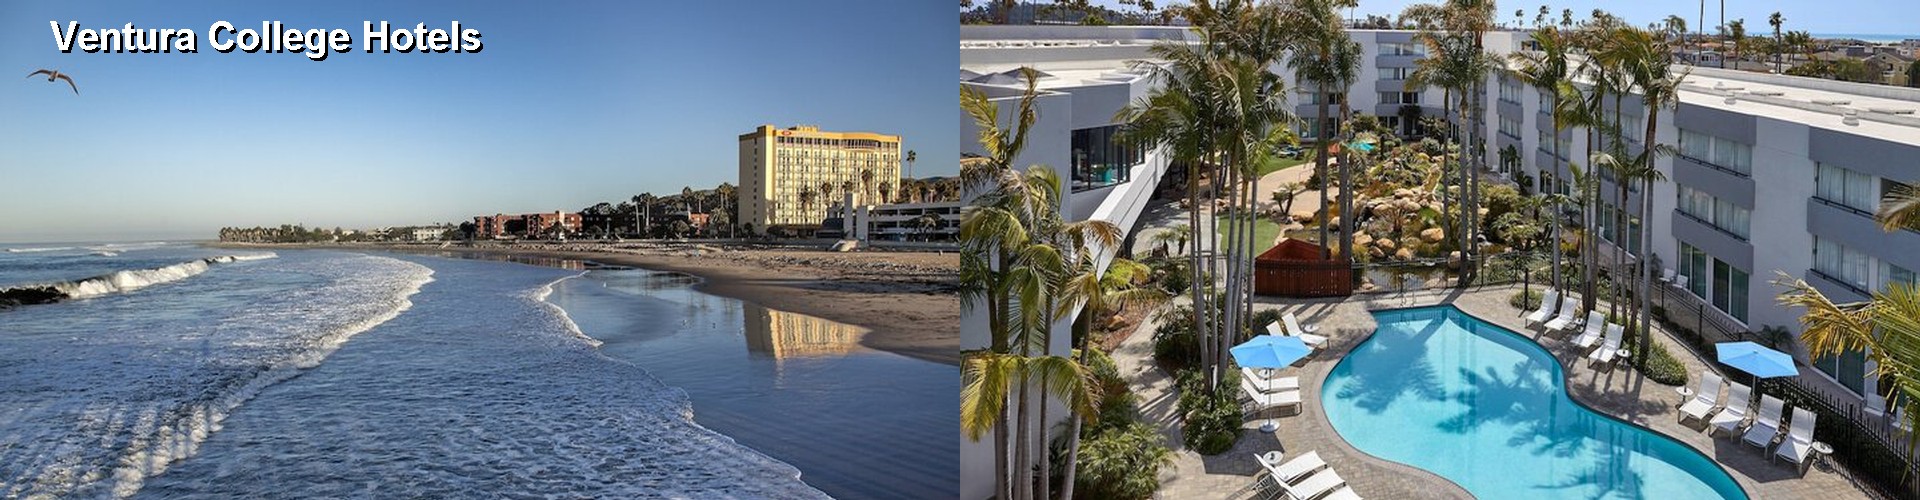 2 Best Hotels near Ventura College